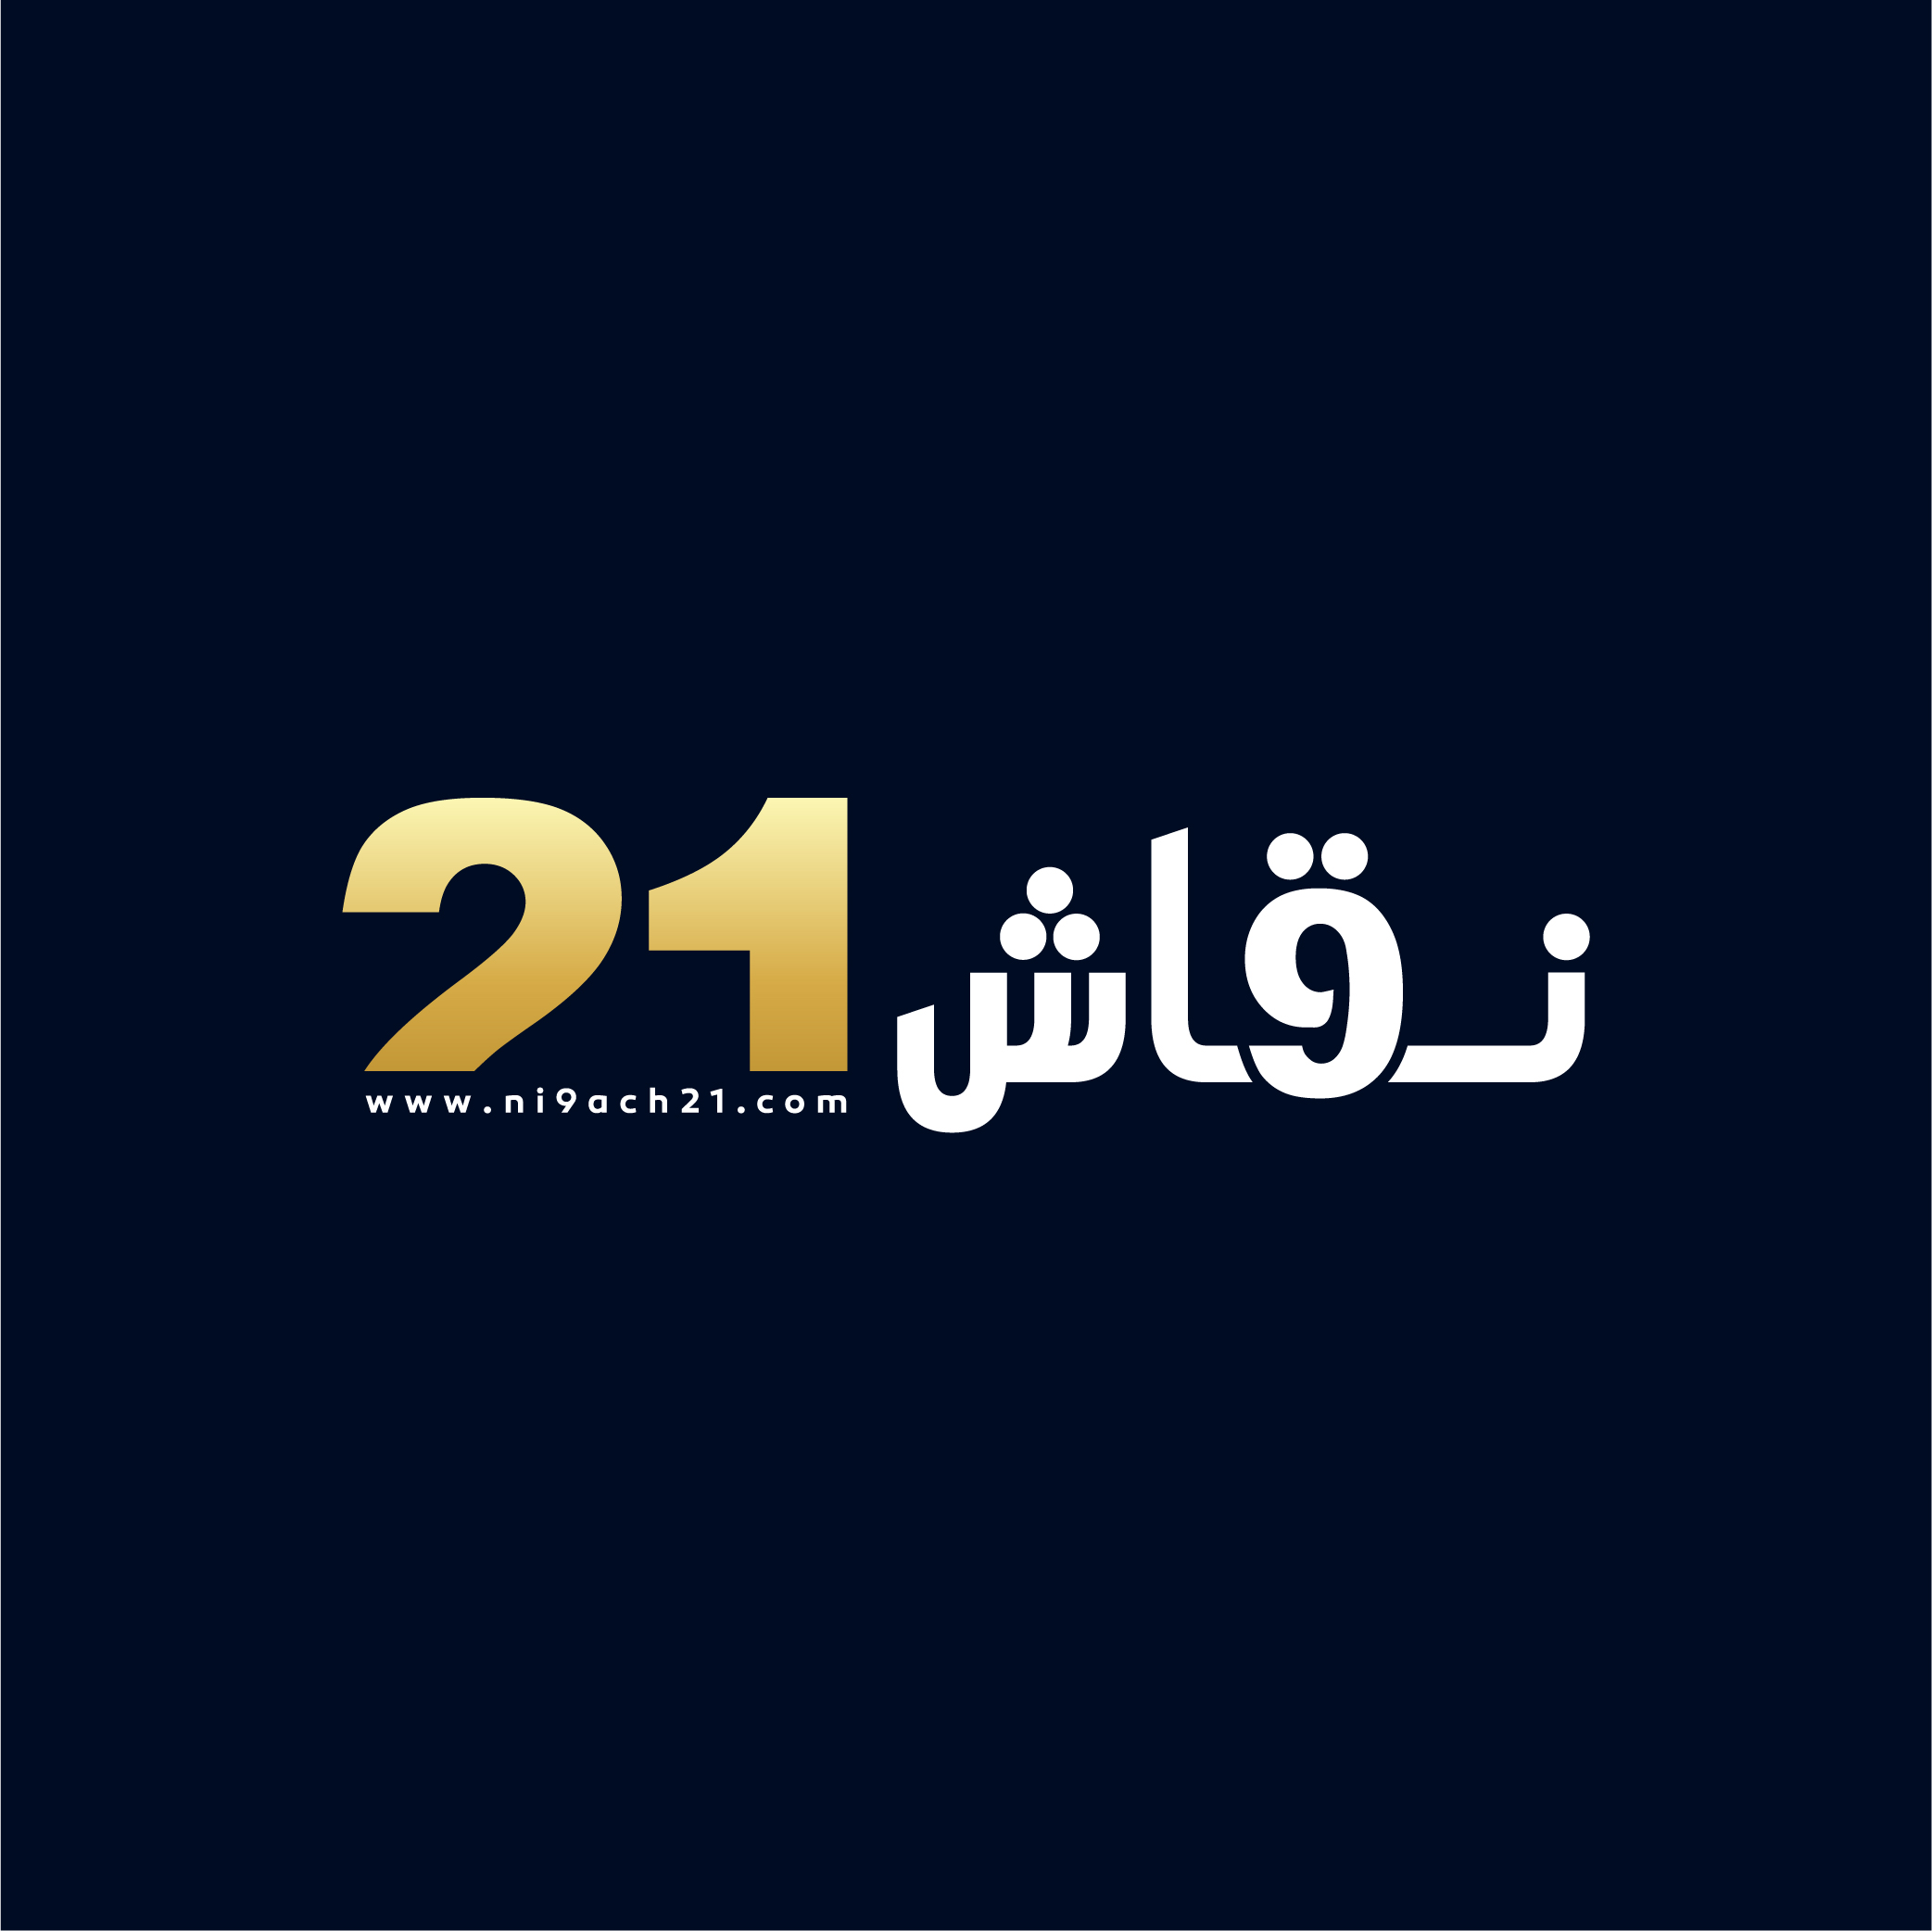 Ni9ach21 : Les journalistes licenciés 